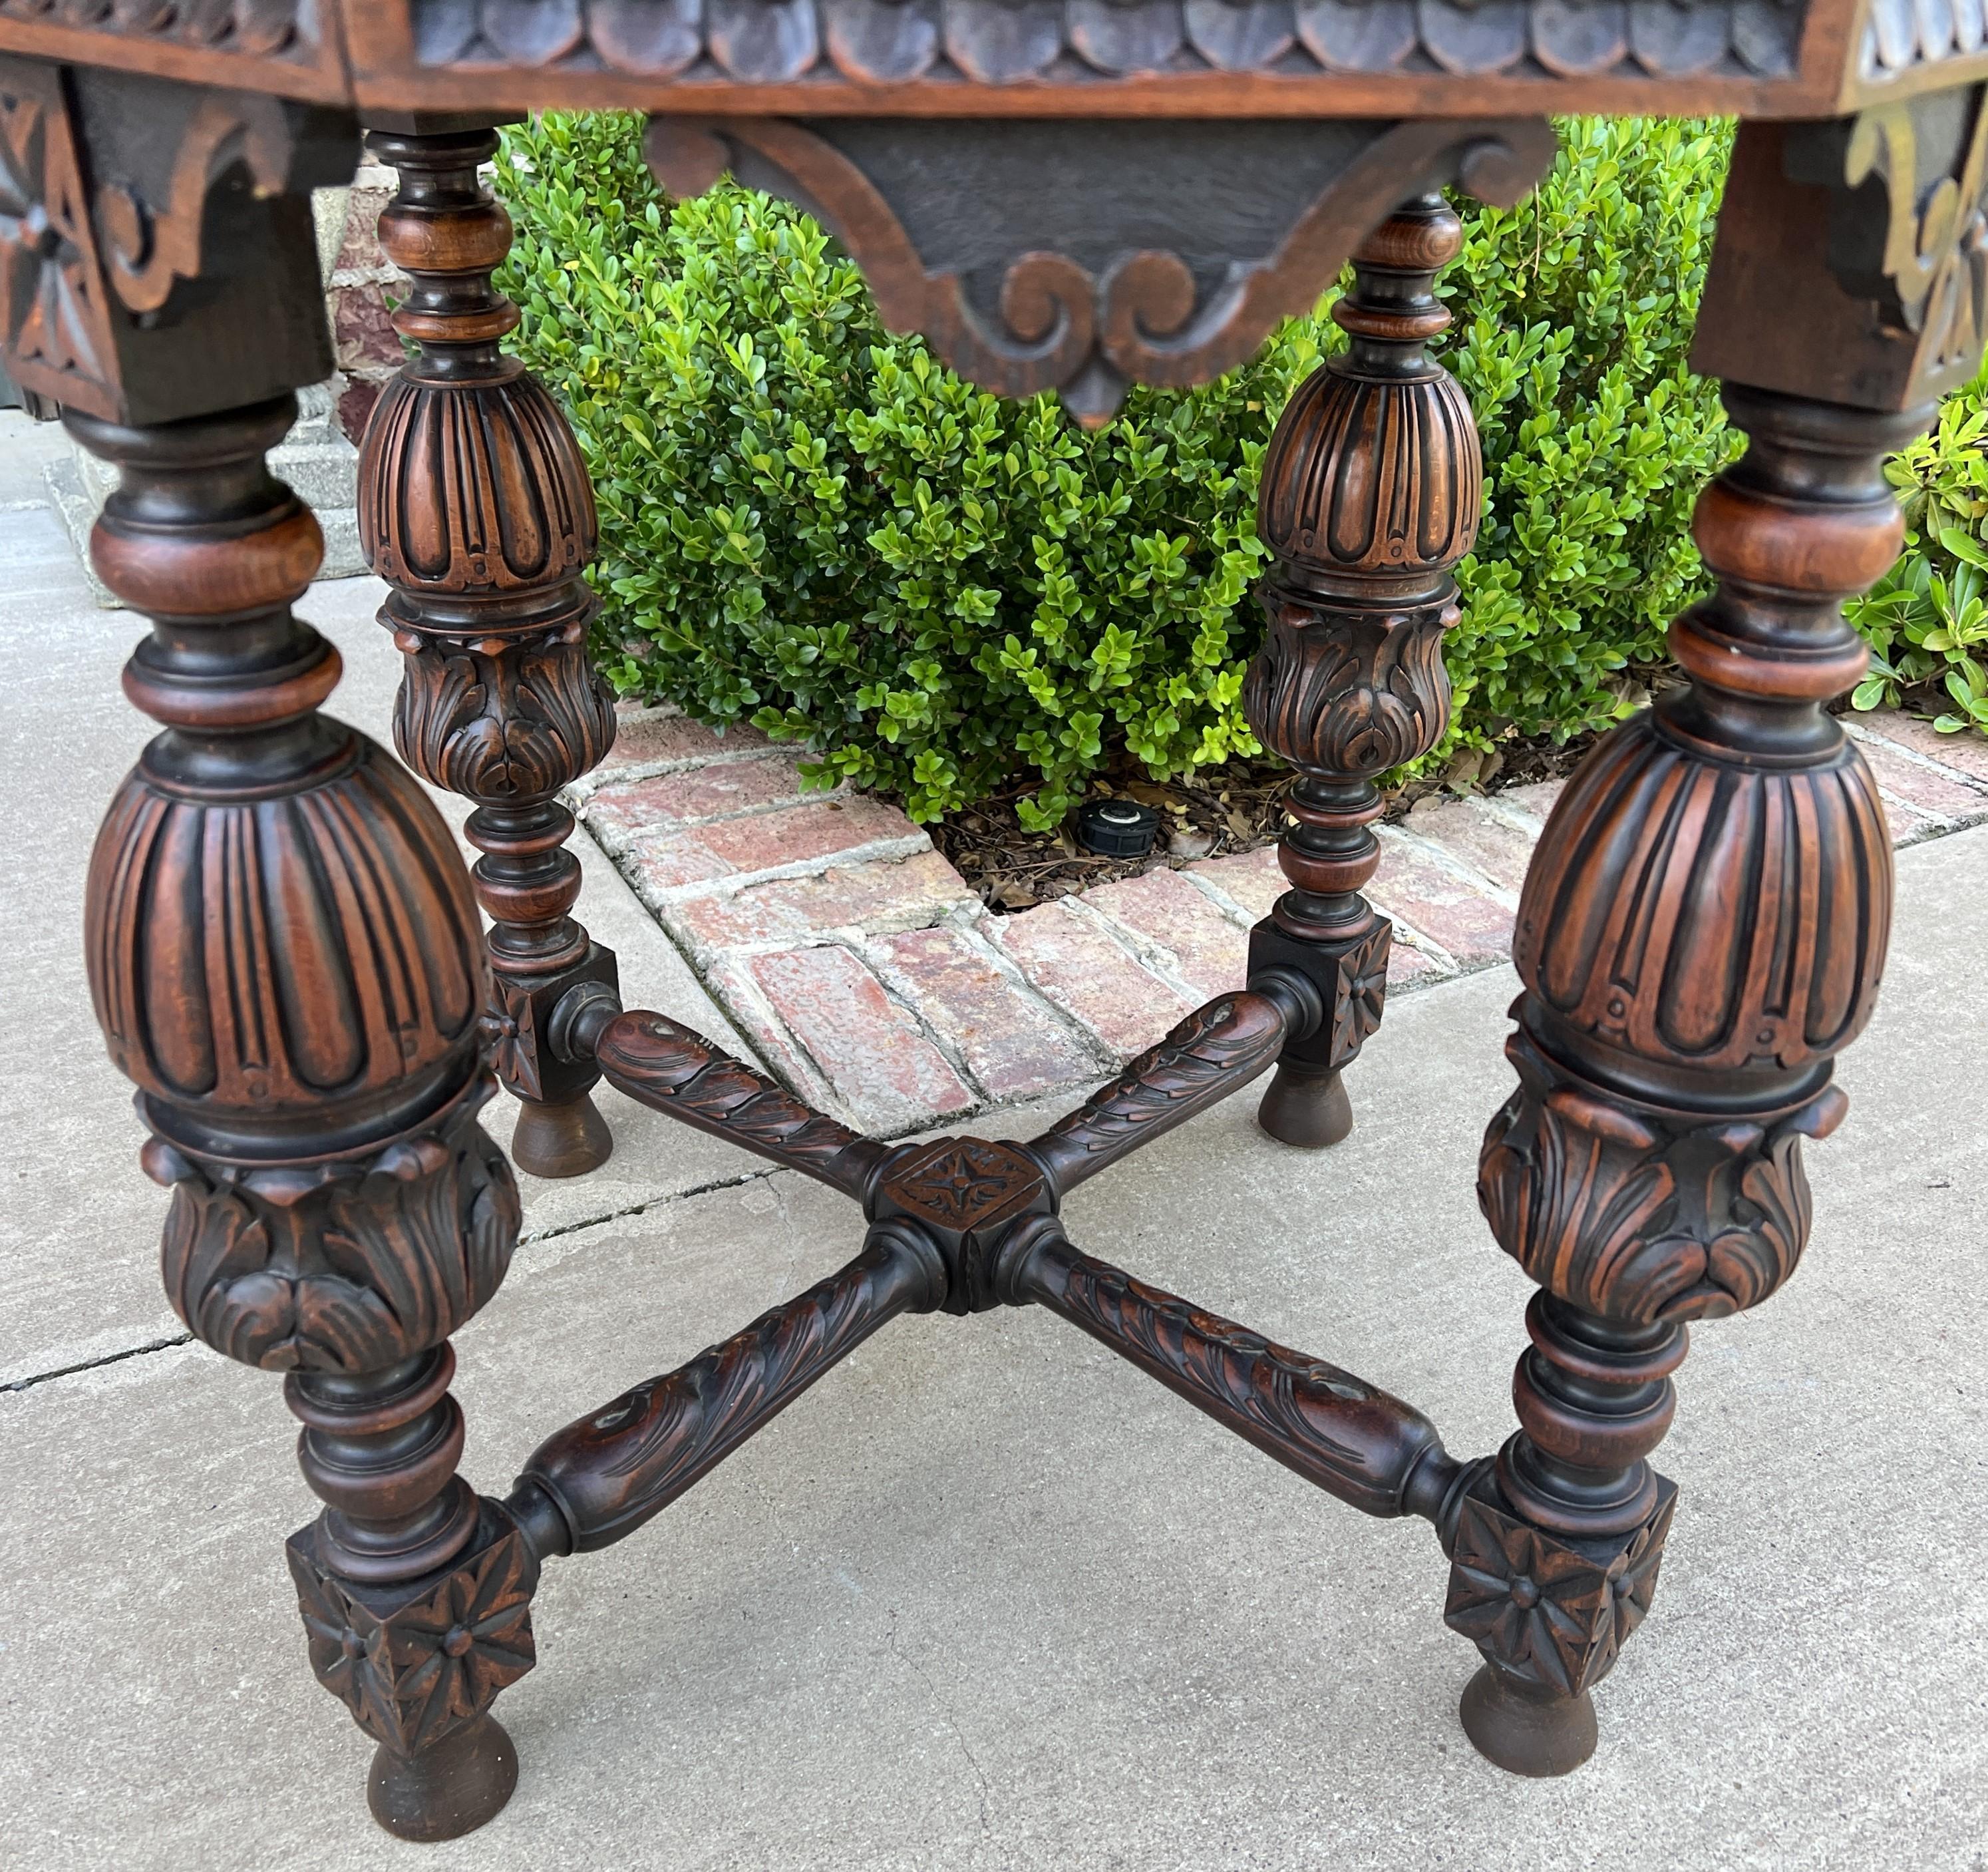 Antique French Table Octagonal Renaissance Revival Carved Oak, 19th Century For Sale 4